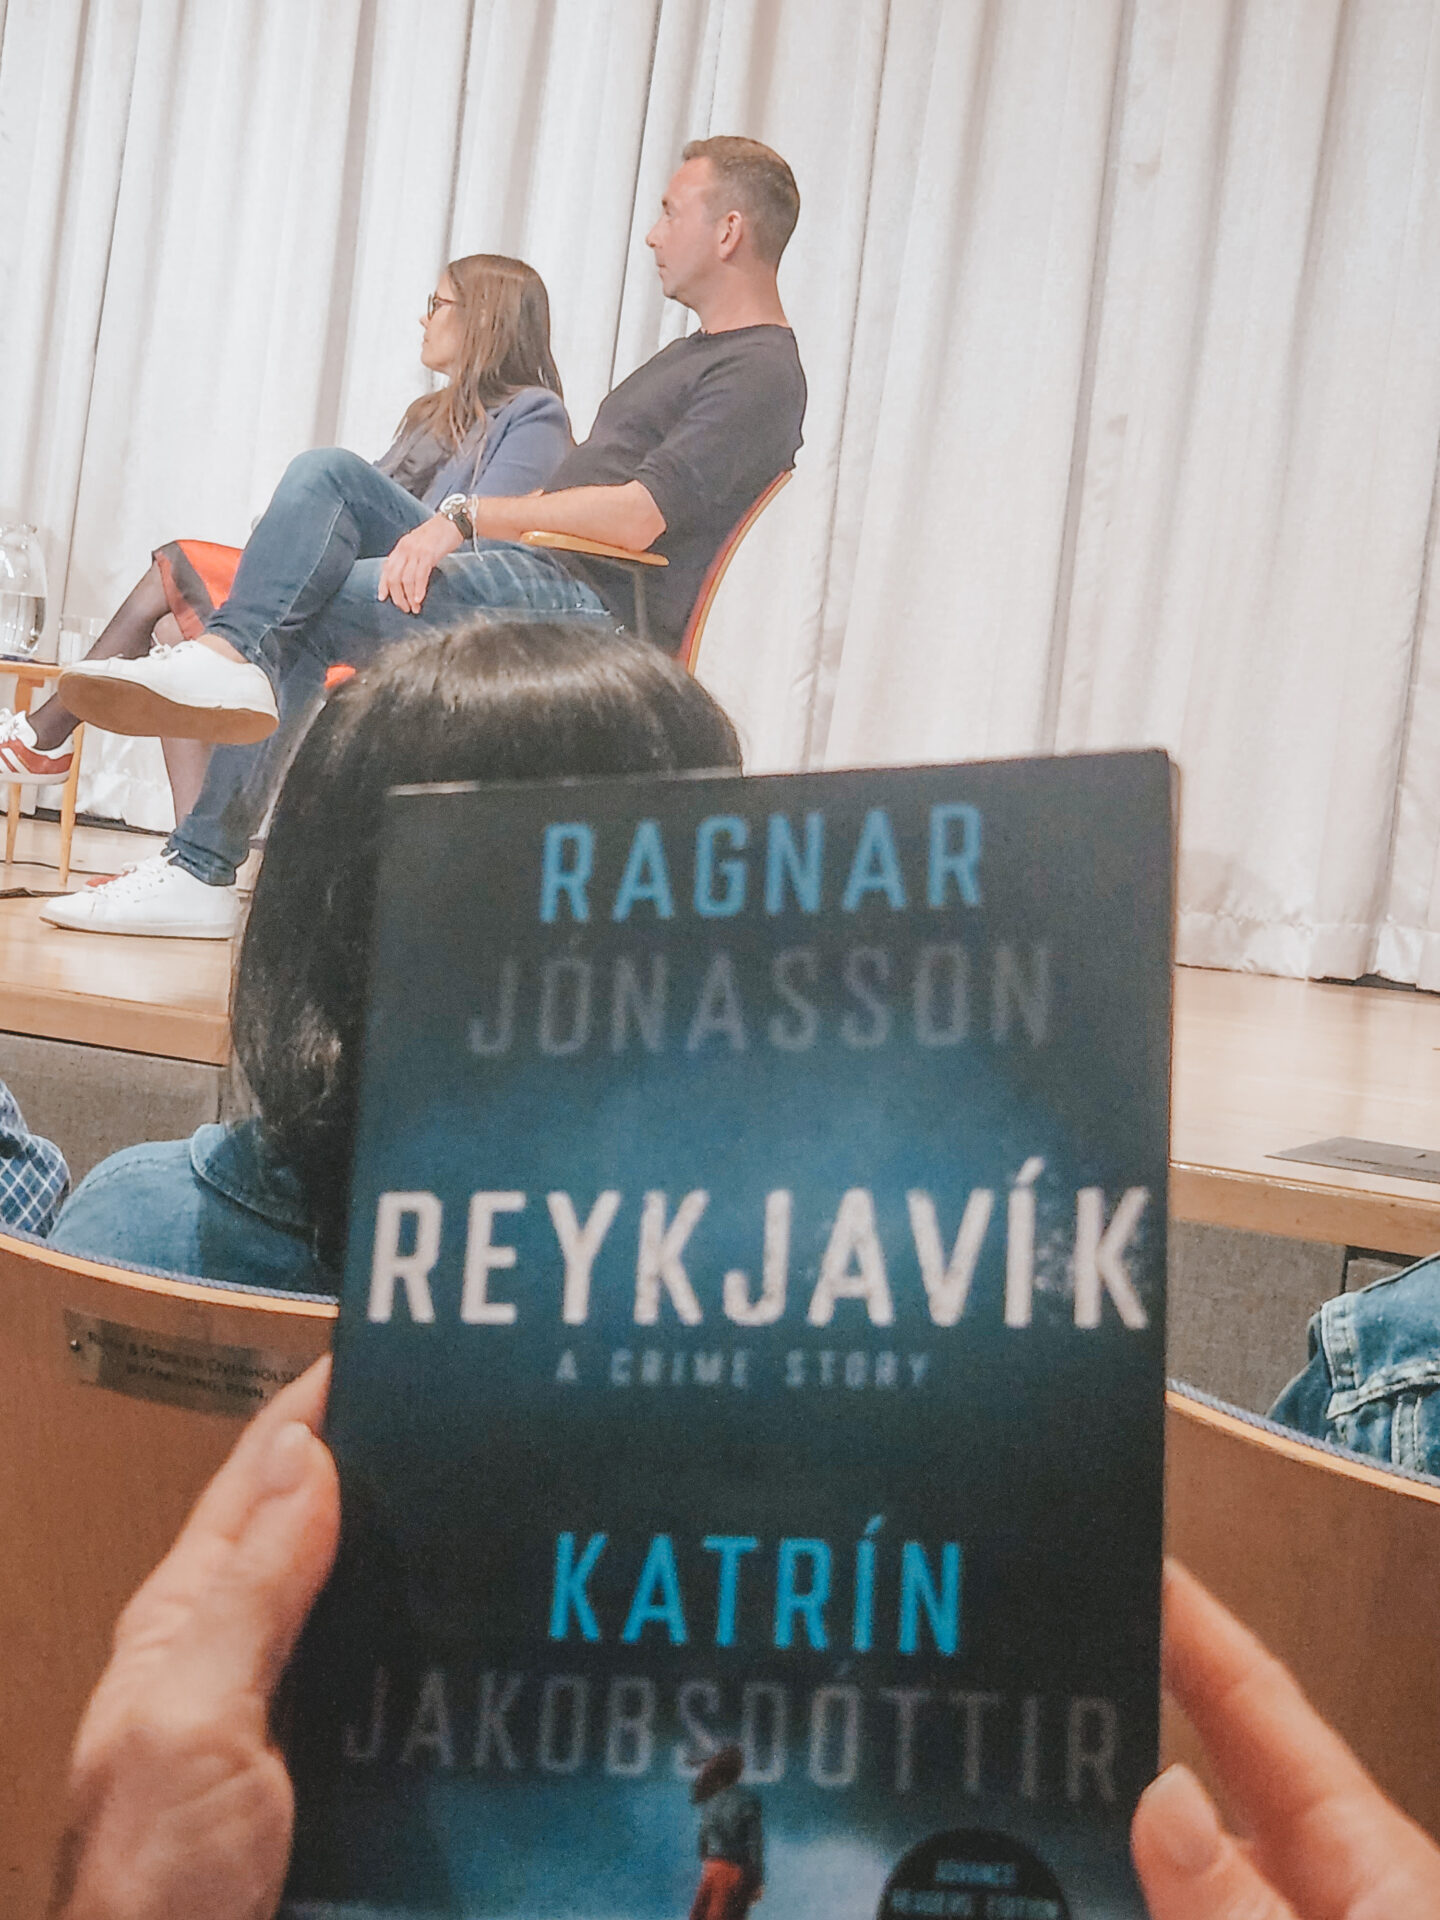 Rekjavik by Ragnar Jonasson, Katrin Jakobsdottir #bookreview #authorevent #translatedbook